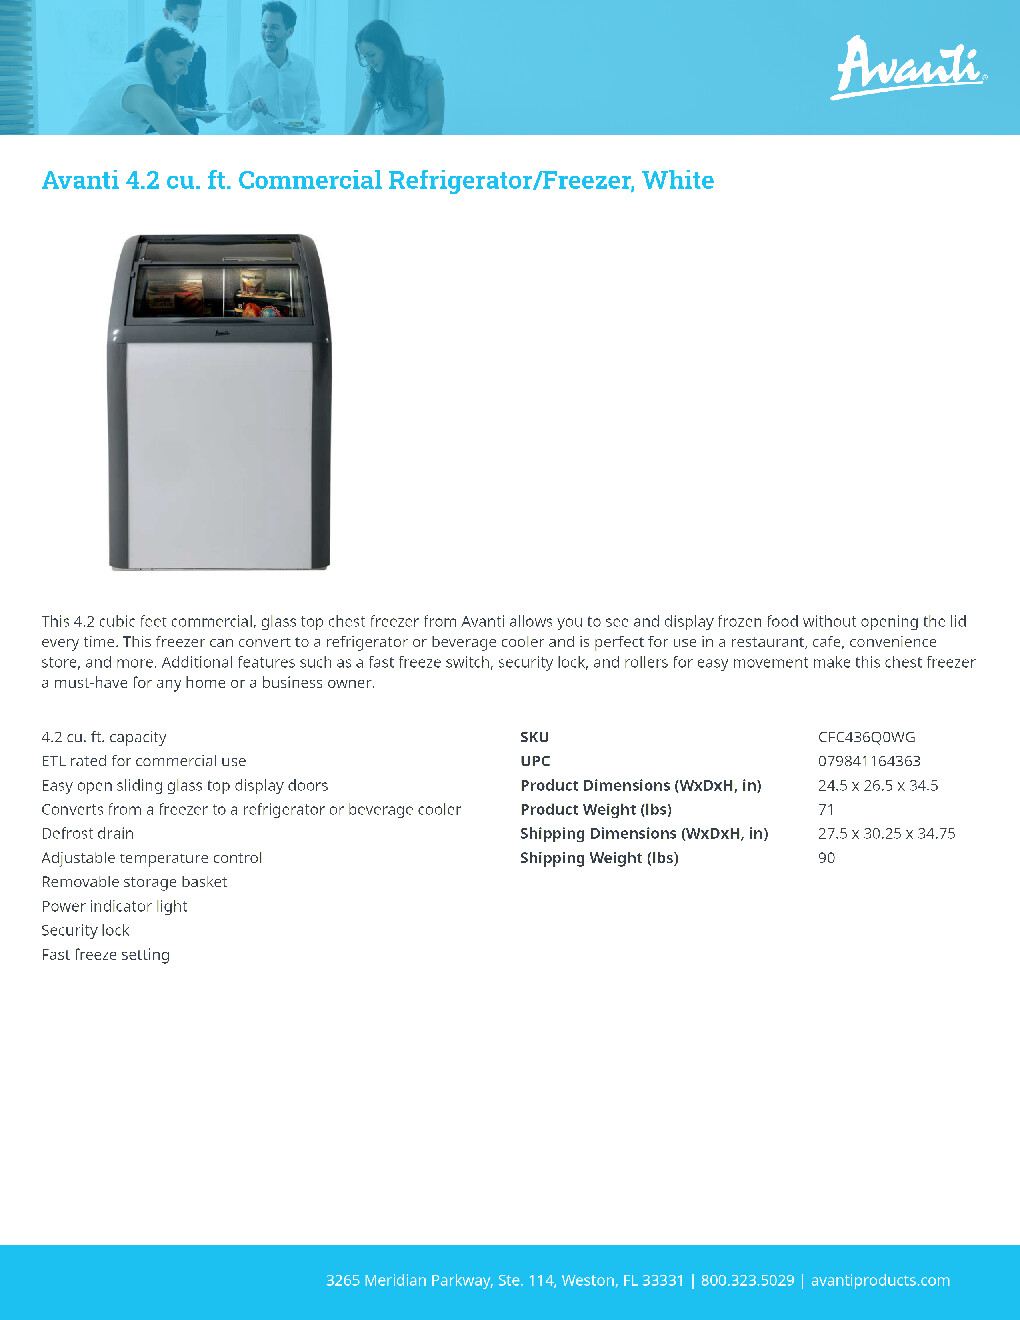 Avanti CFC436Q0WG Convertible Refrigerator Freezer